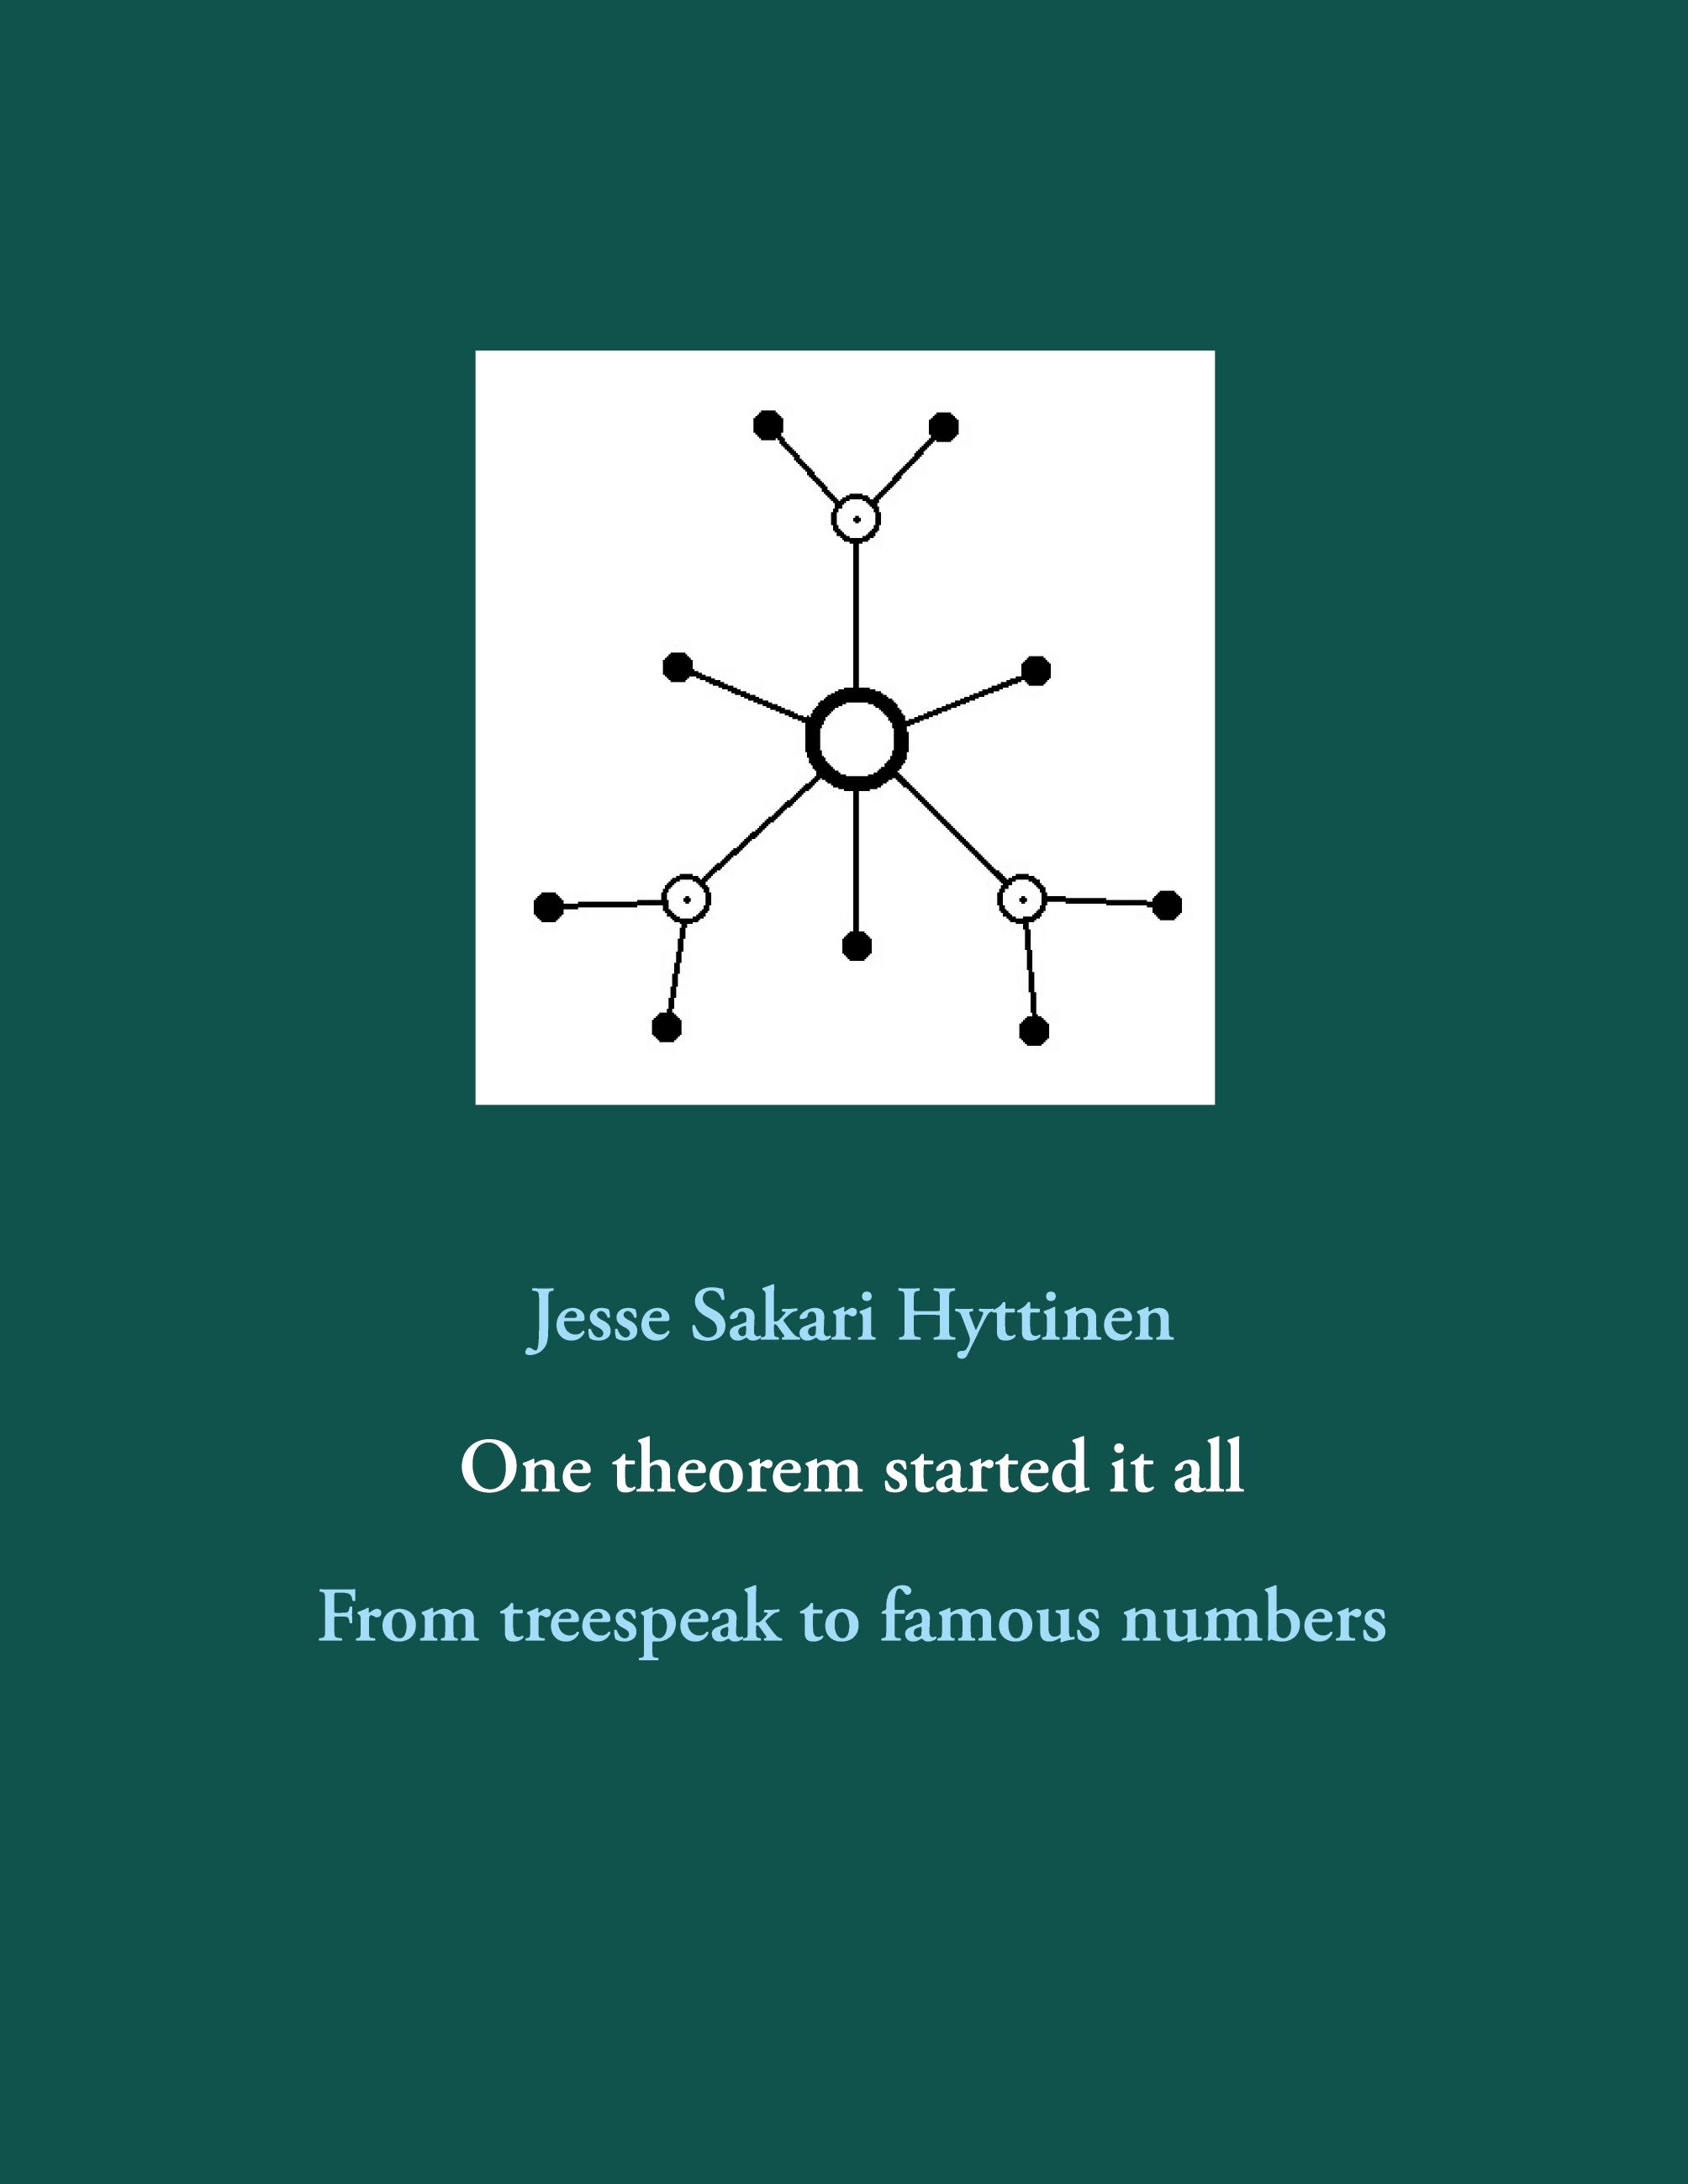 Jesse Sakari Hyttinen : One theorem started it all